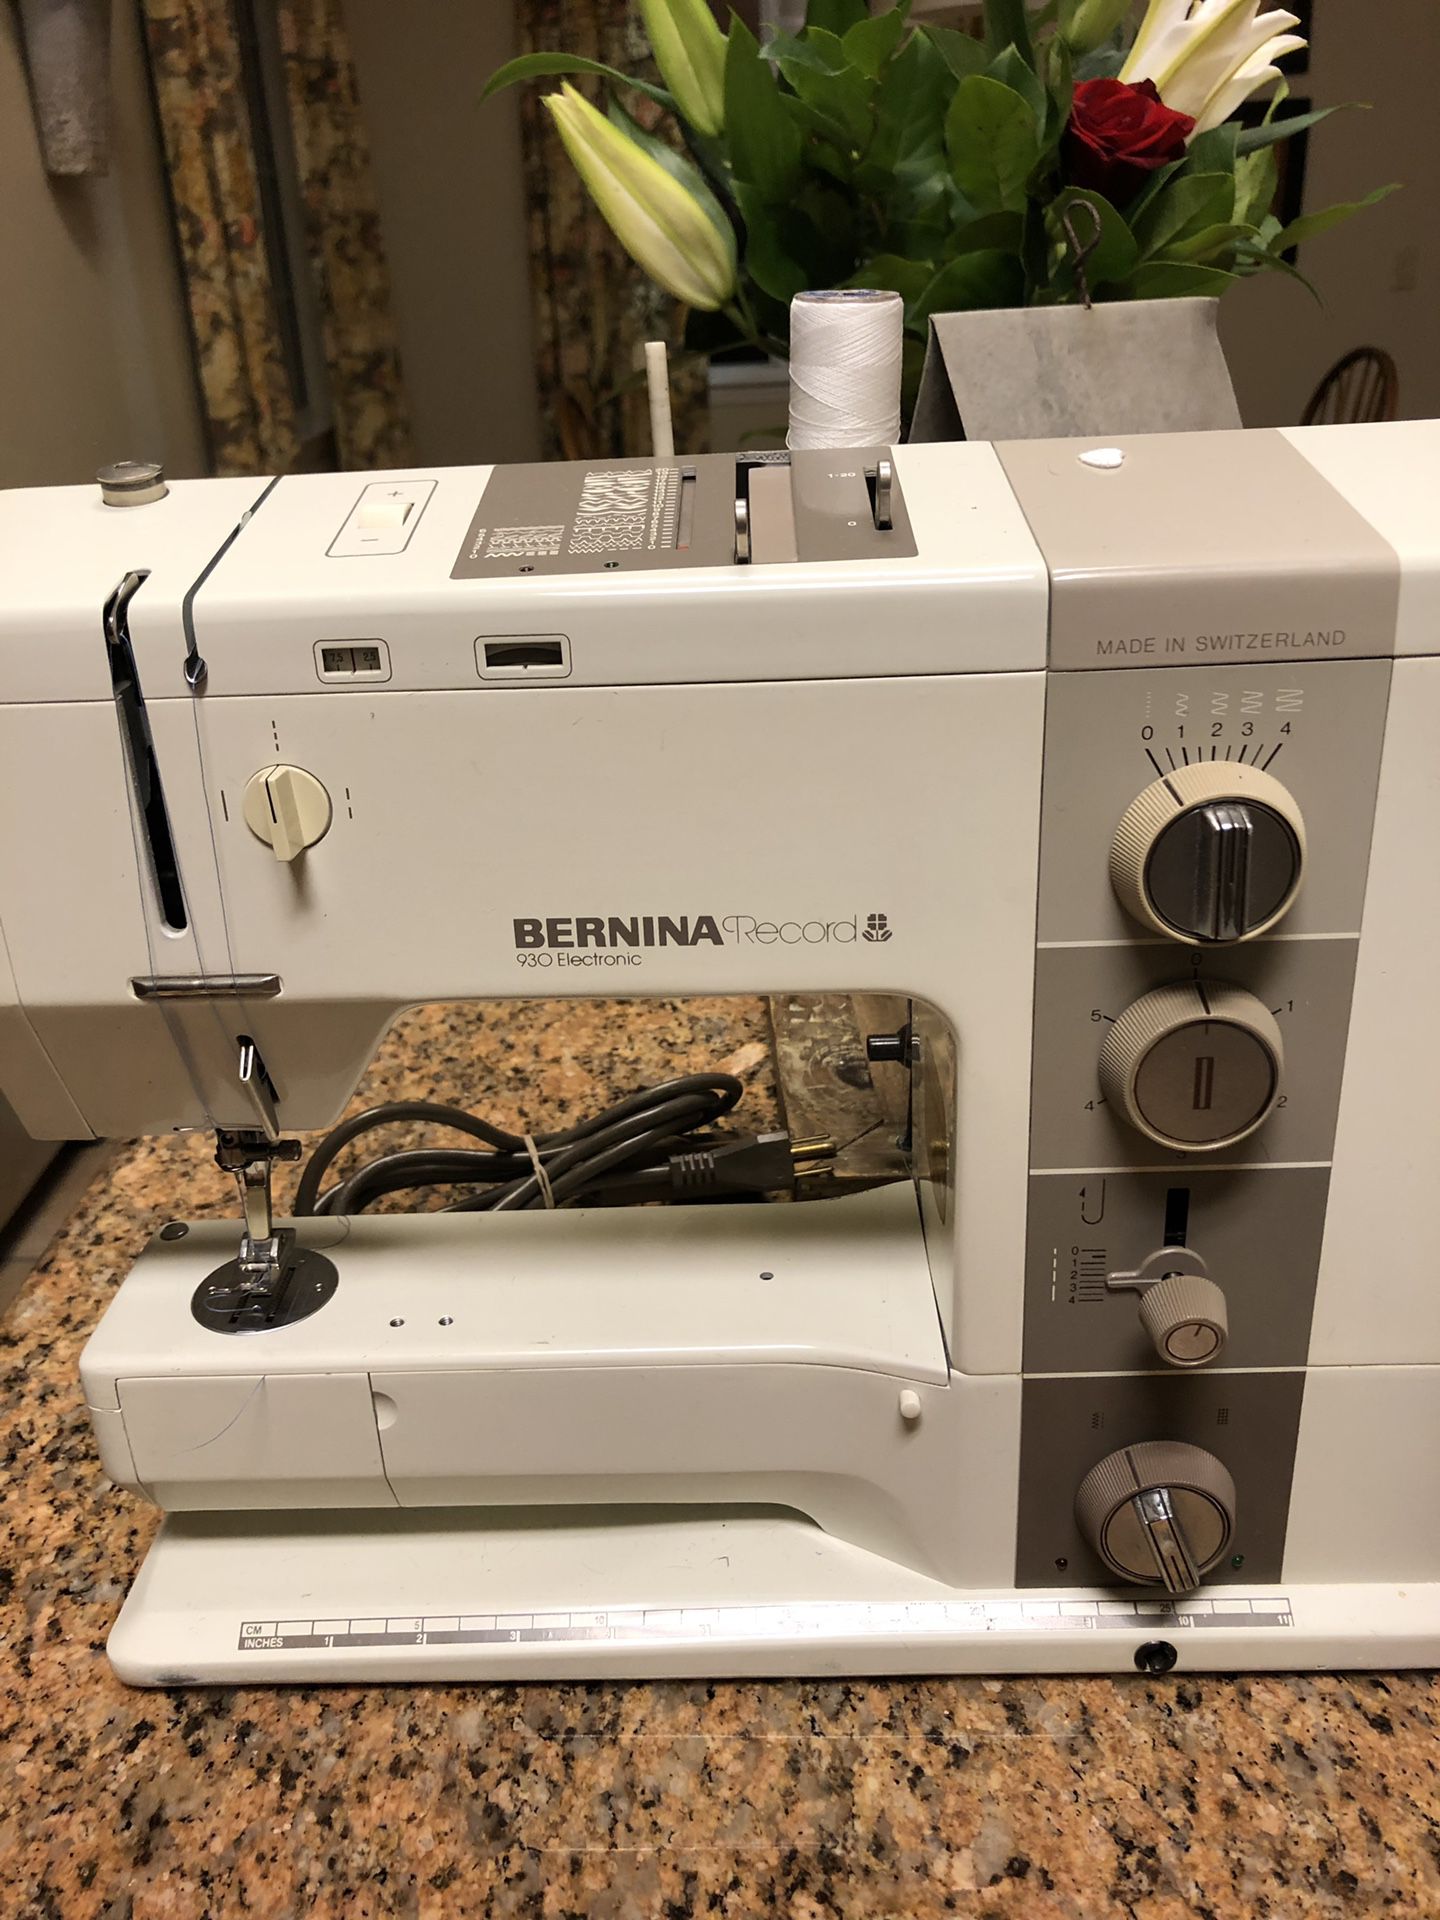 Bernina 930 record sewing machine